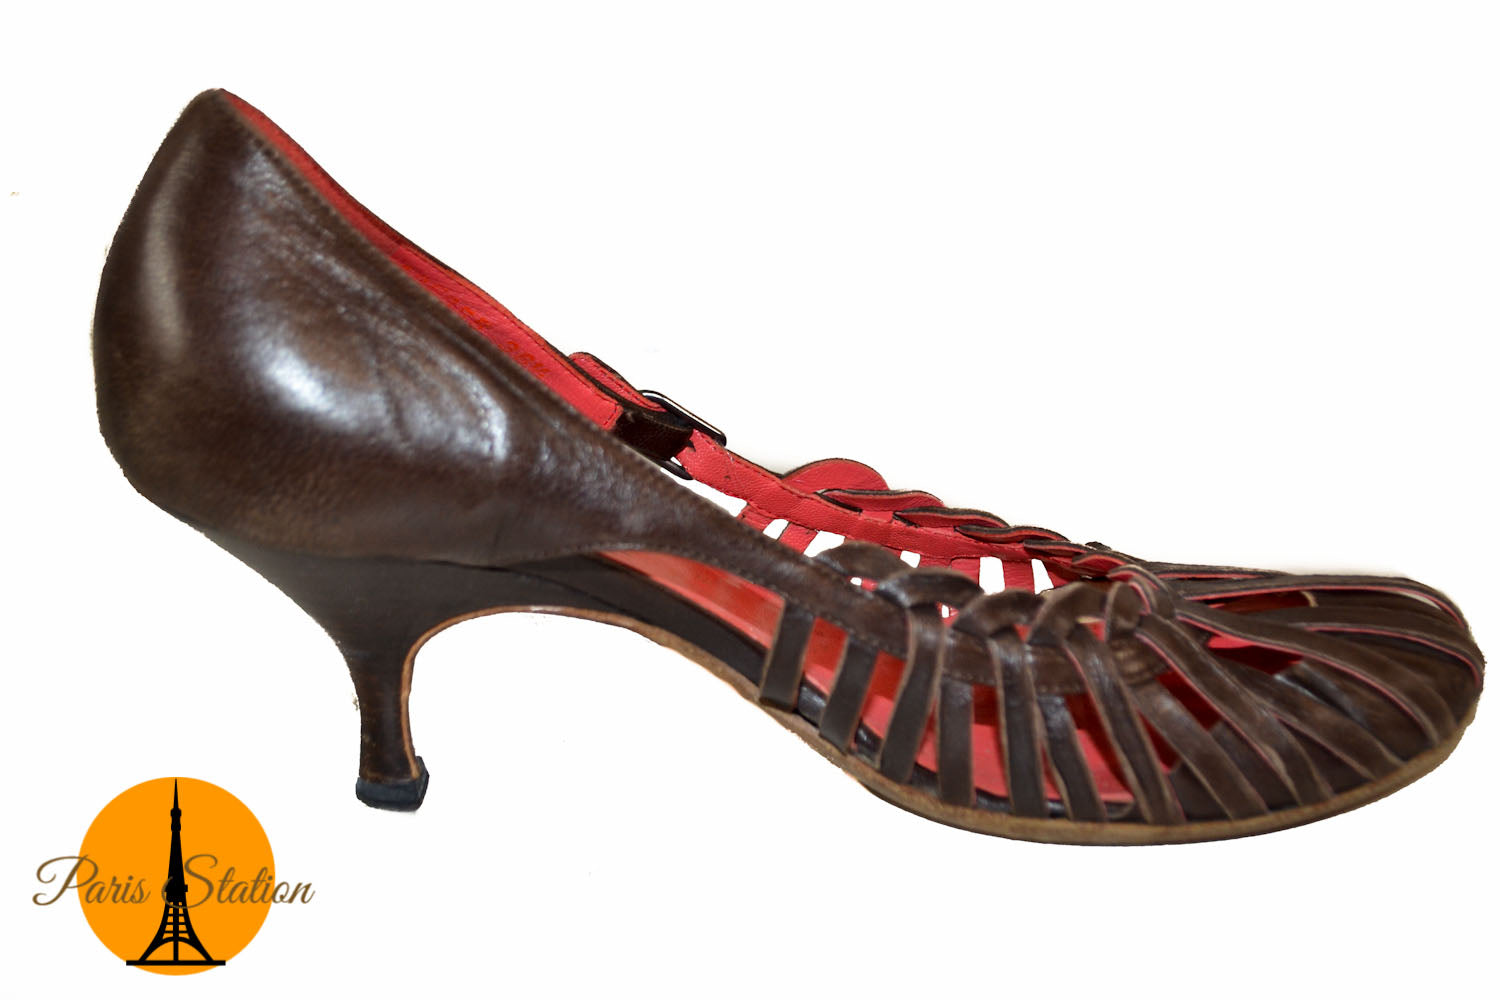 Authentic Bottega Veneta Brown Leather Sandal Shoes 36.5